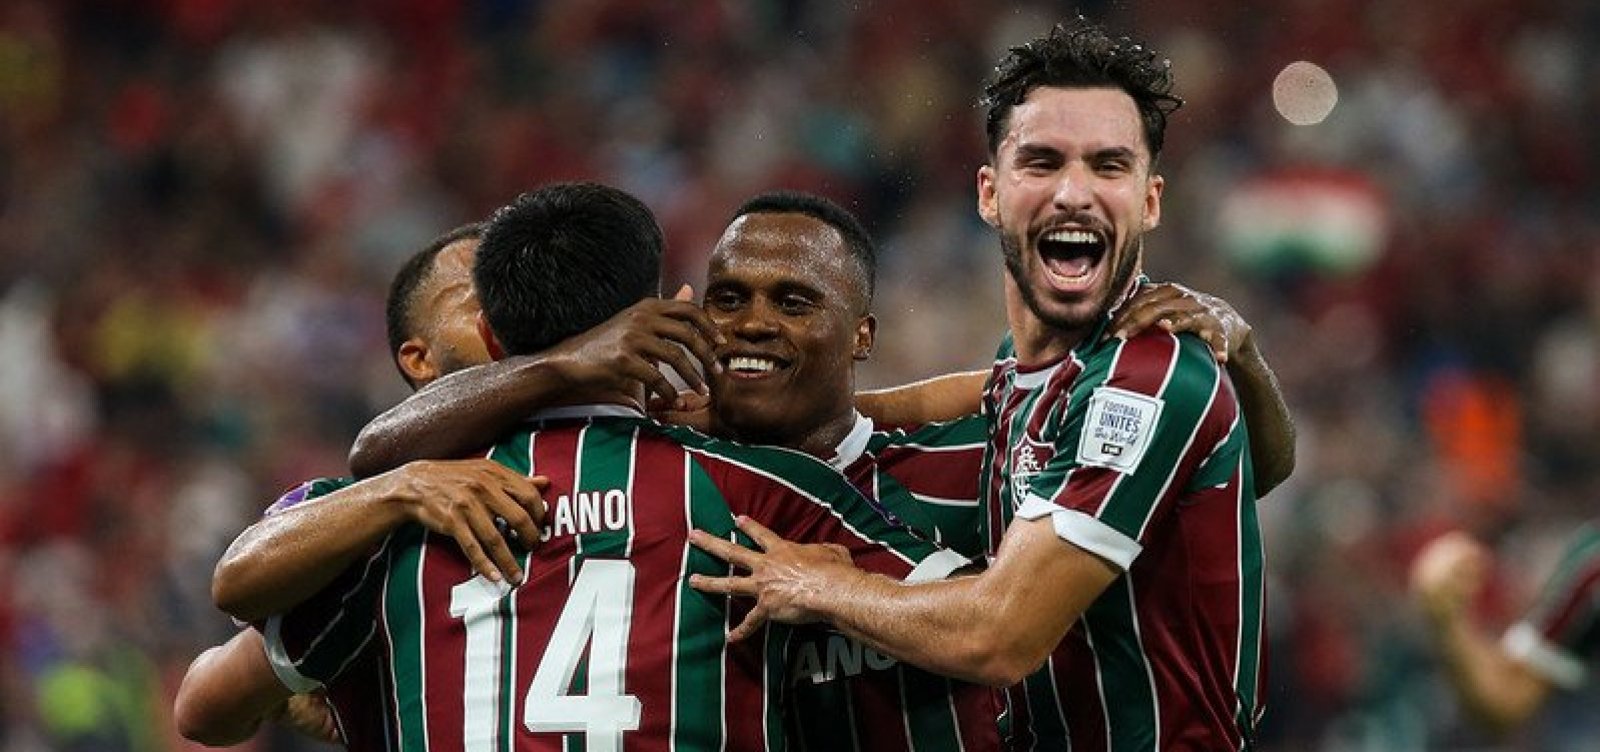 Fluminense vence Al Ahly por 2 a 0 e se classifica para final do Mundial de Clubes